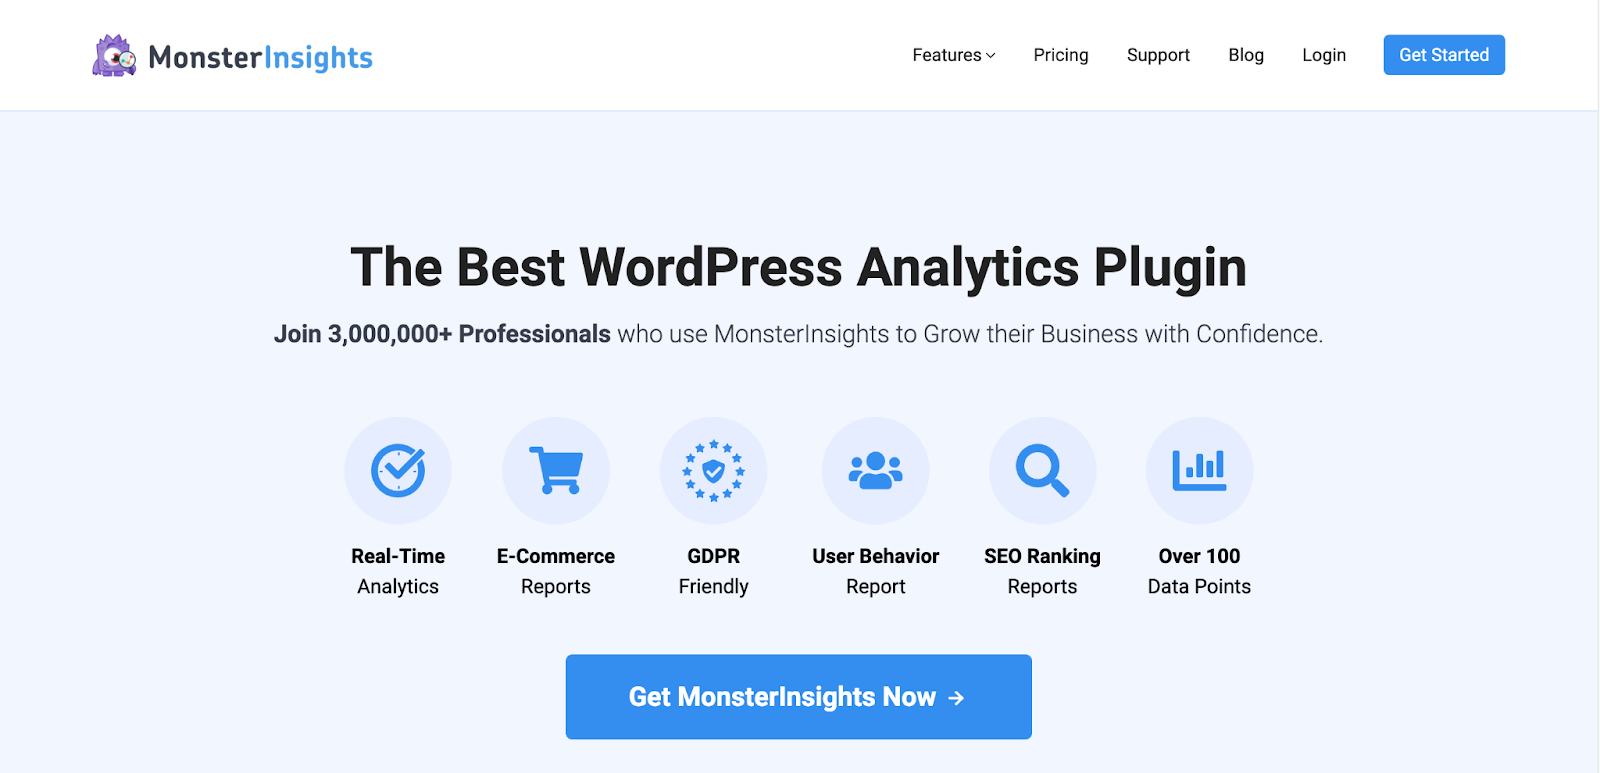 MonsterInsights - The Best WordPress Analytics Plugin